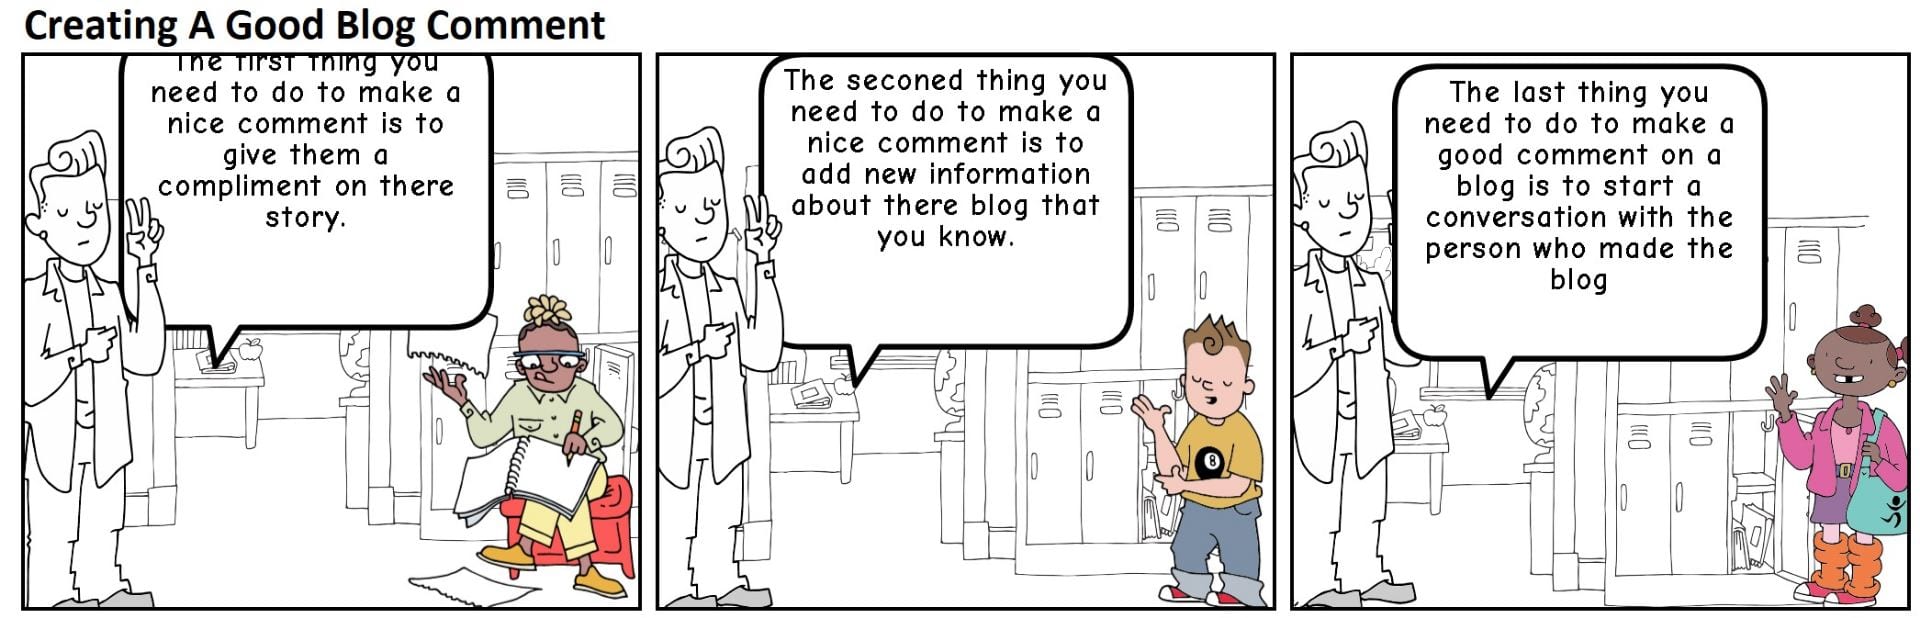 Creating a Good Blog Comment cartoon